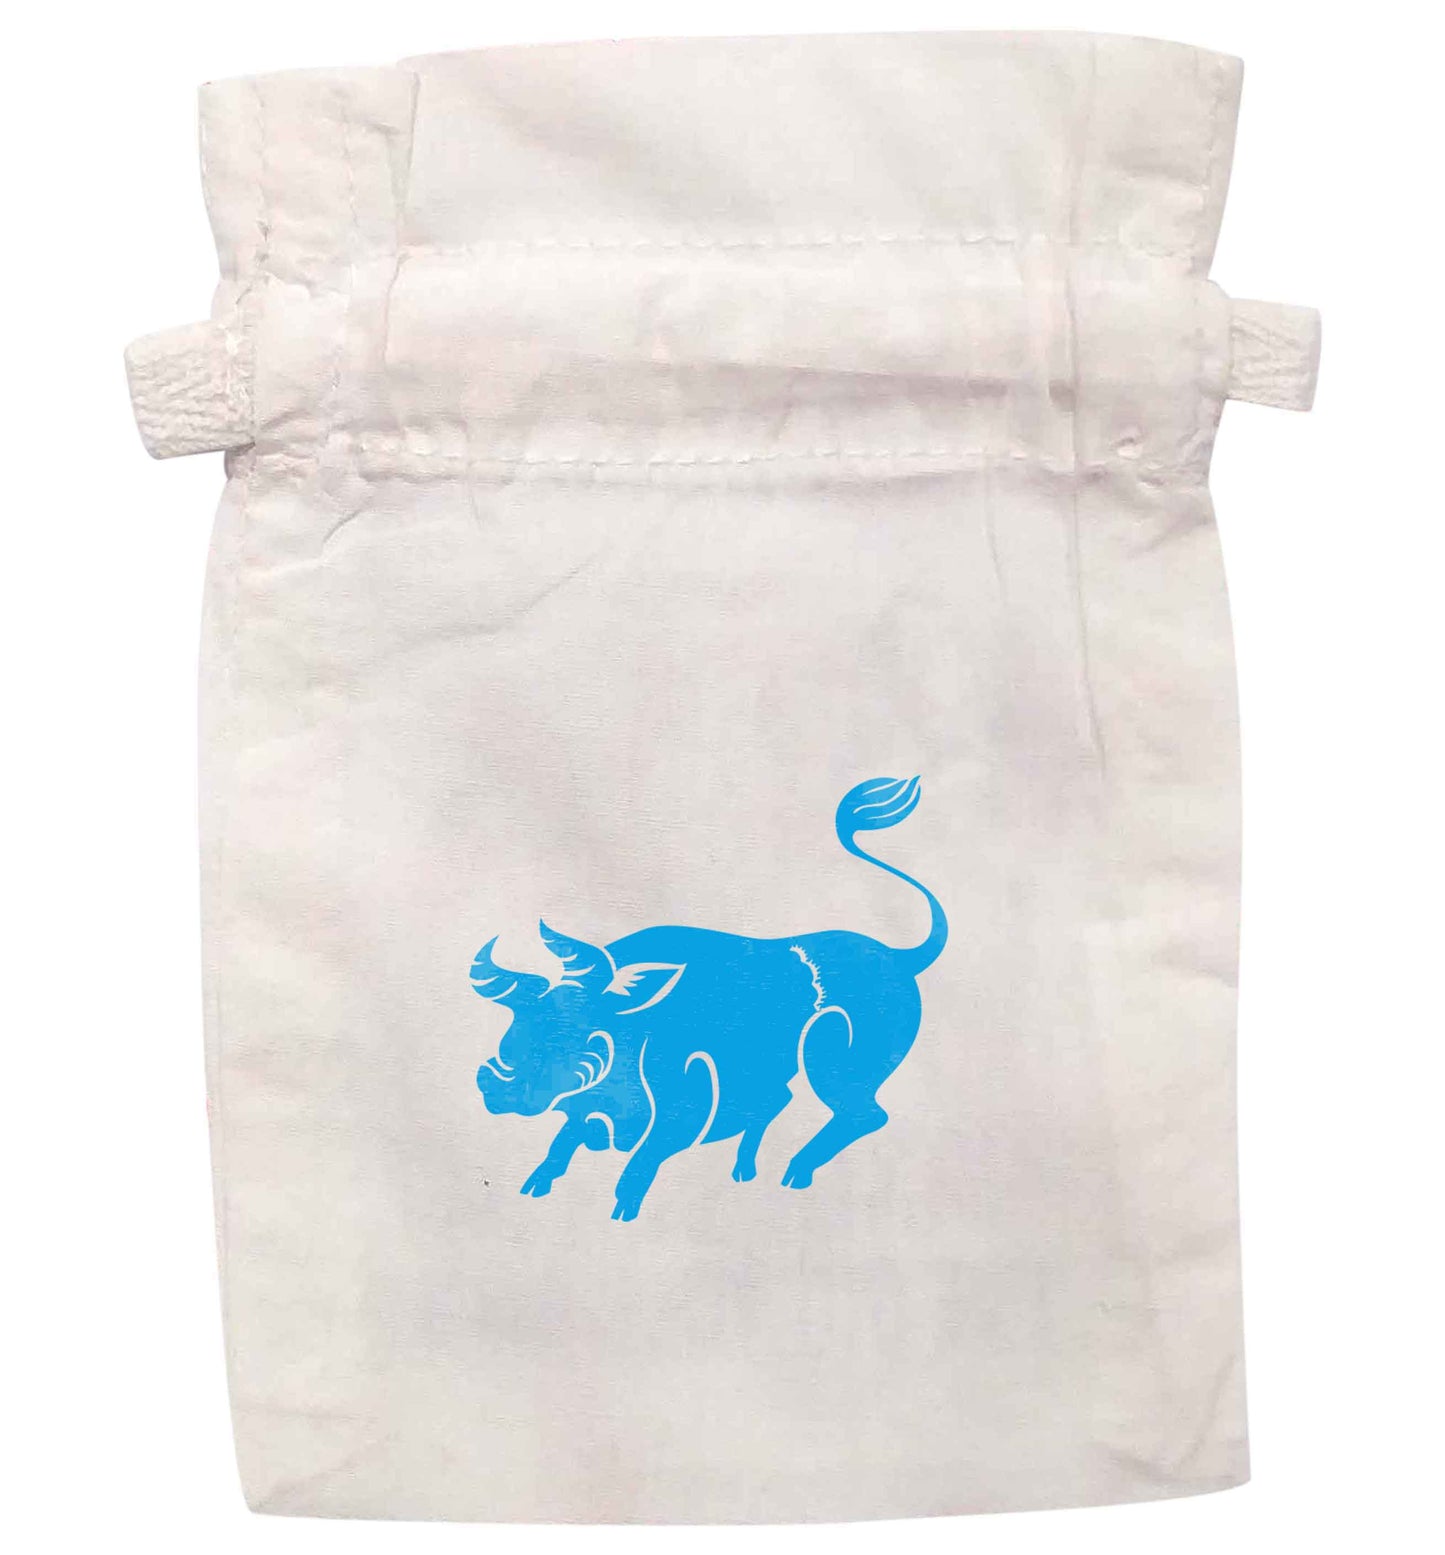 Pig face | XS - L | Pouch / Drawstring bag / Sack | Organic Cotton | Bulk discounts available!